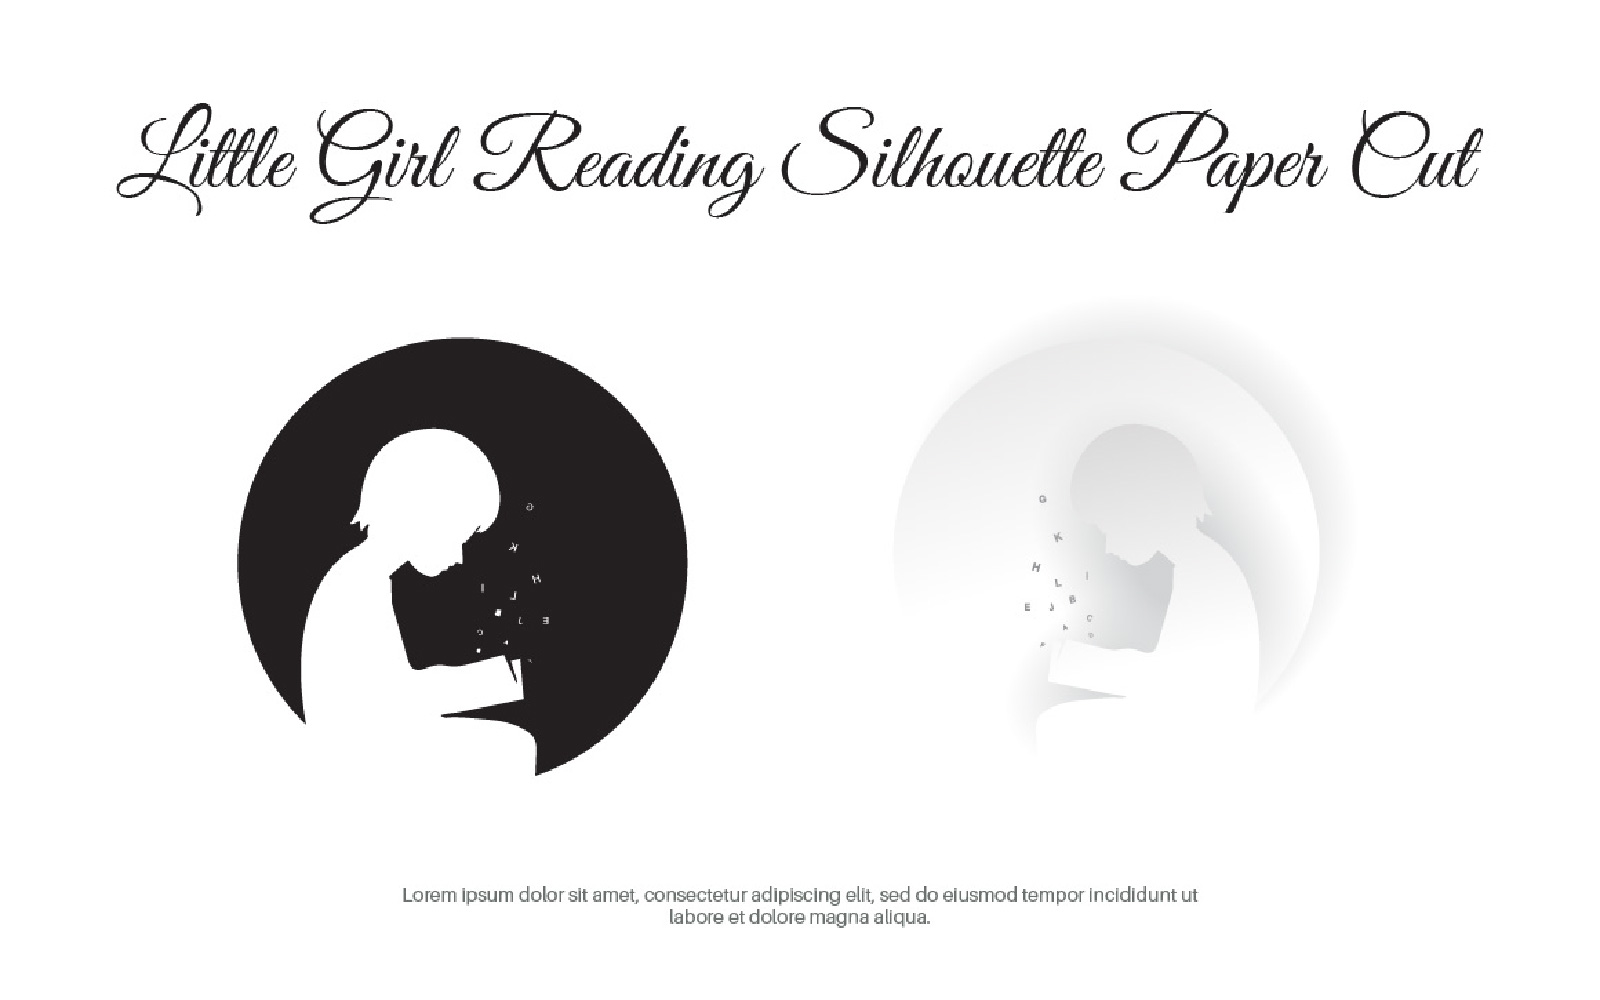 Little Girl Reading Silhouette Paper Cut